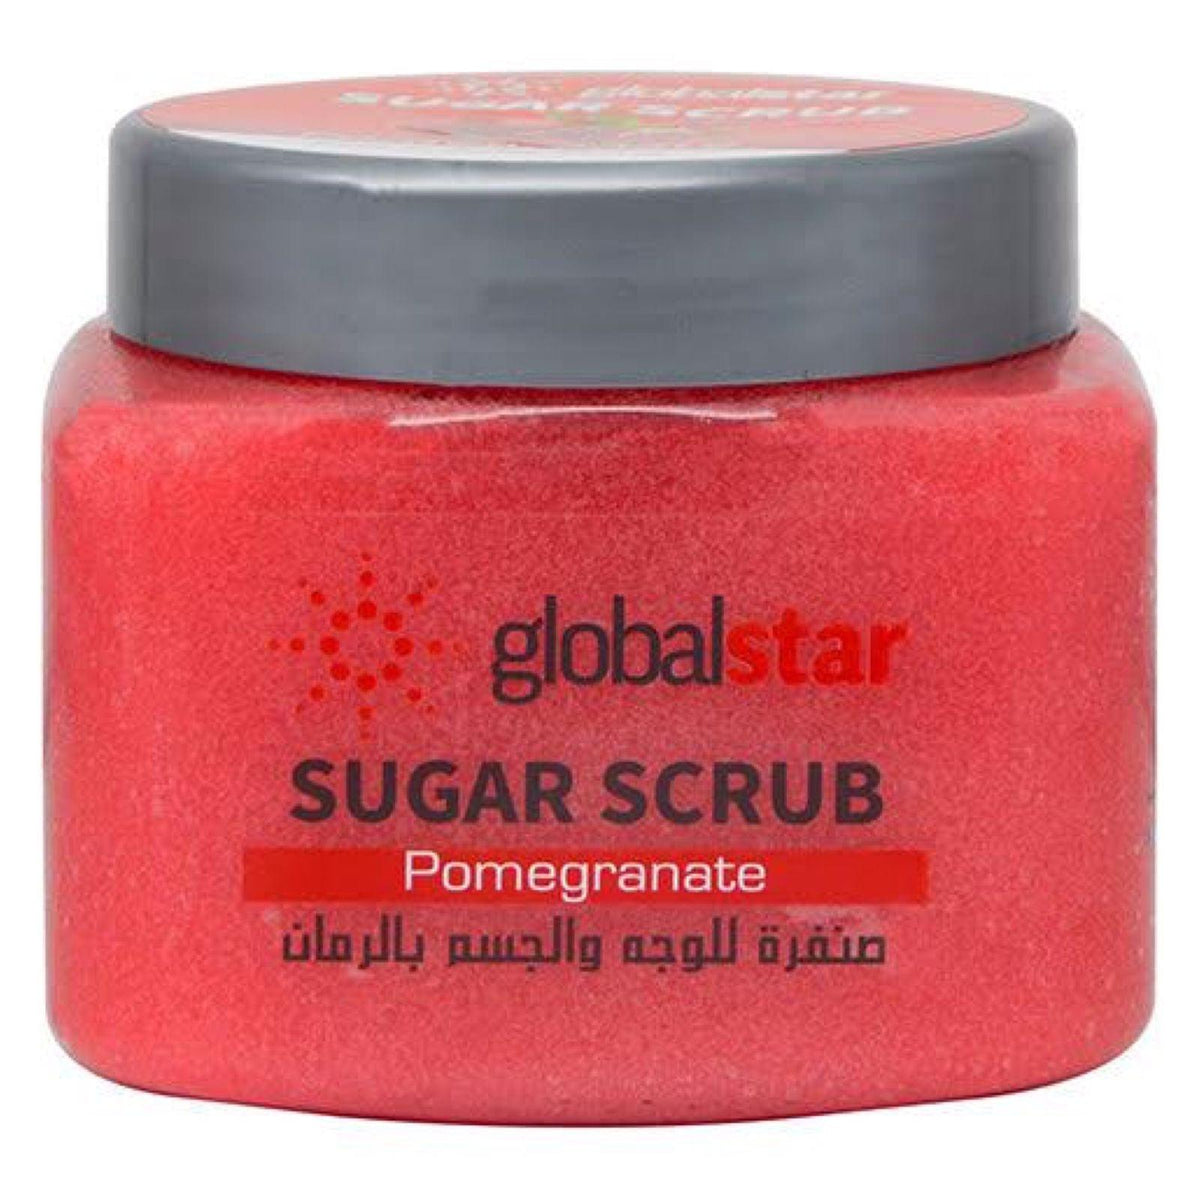 Globalstar Face & Body Sugar Scrub Pomegranate 600g